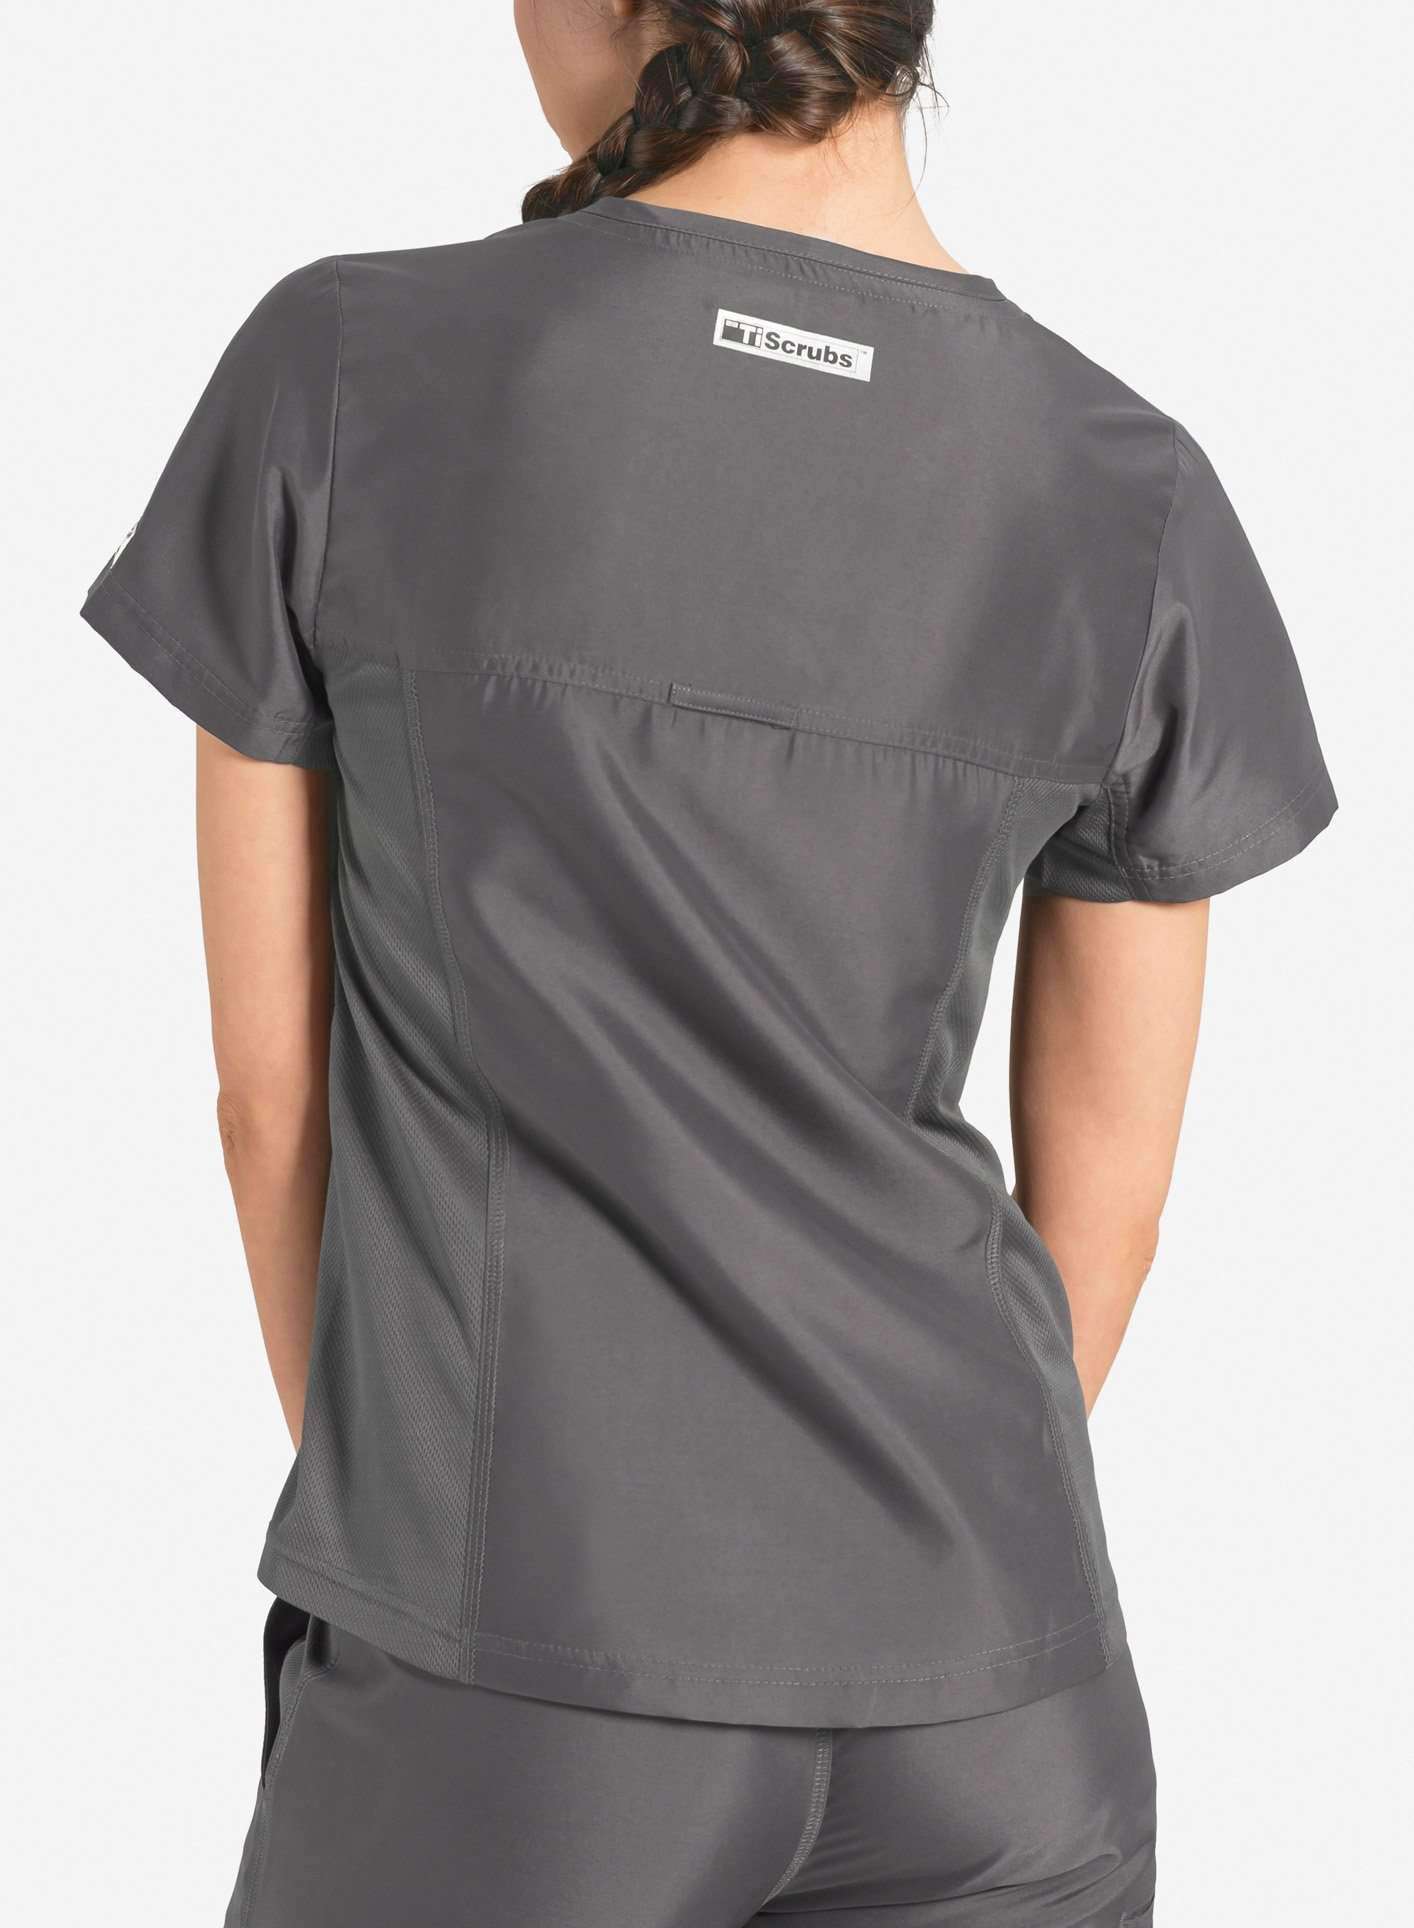 womens Elements short sleeve three pocket scrub top dark gray